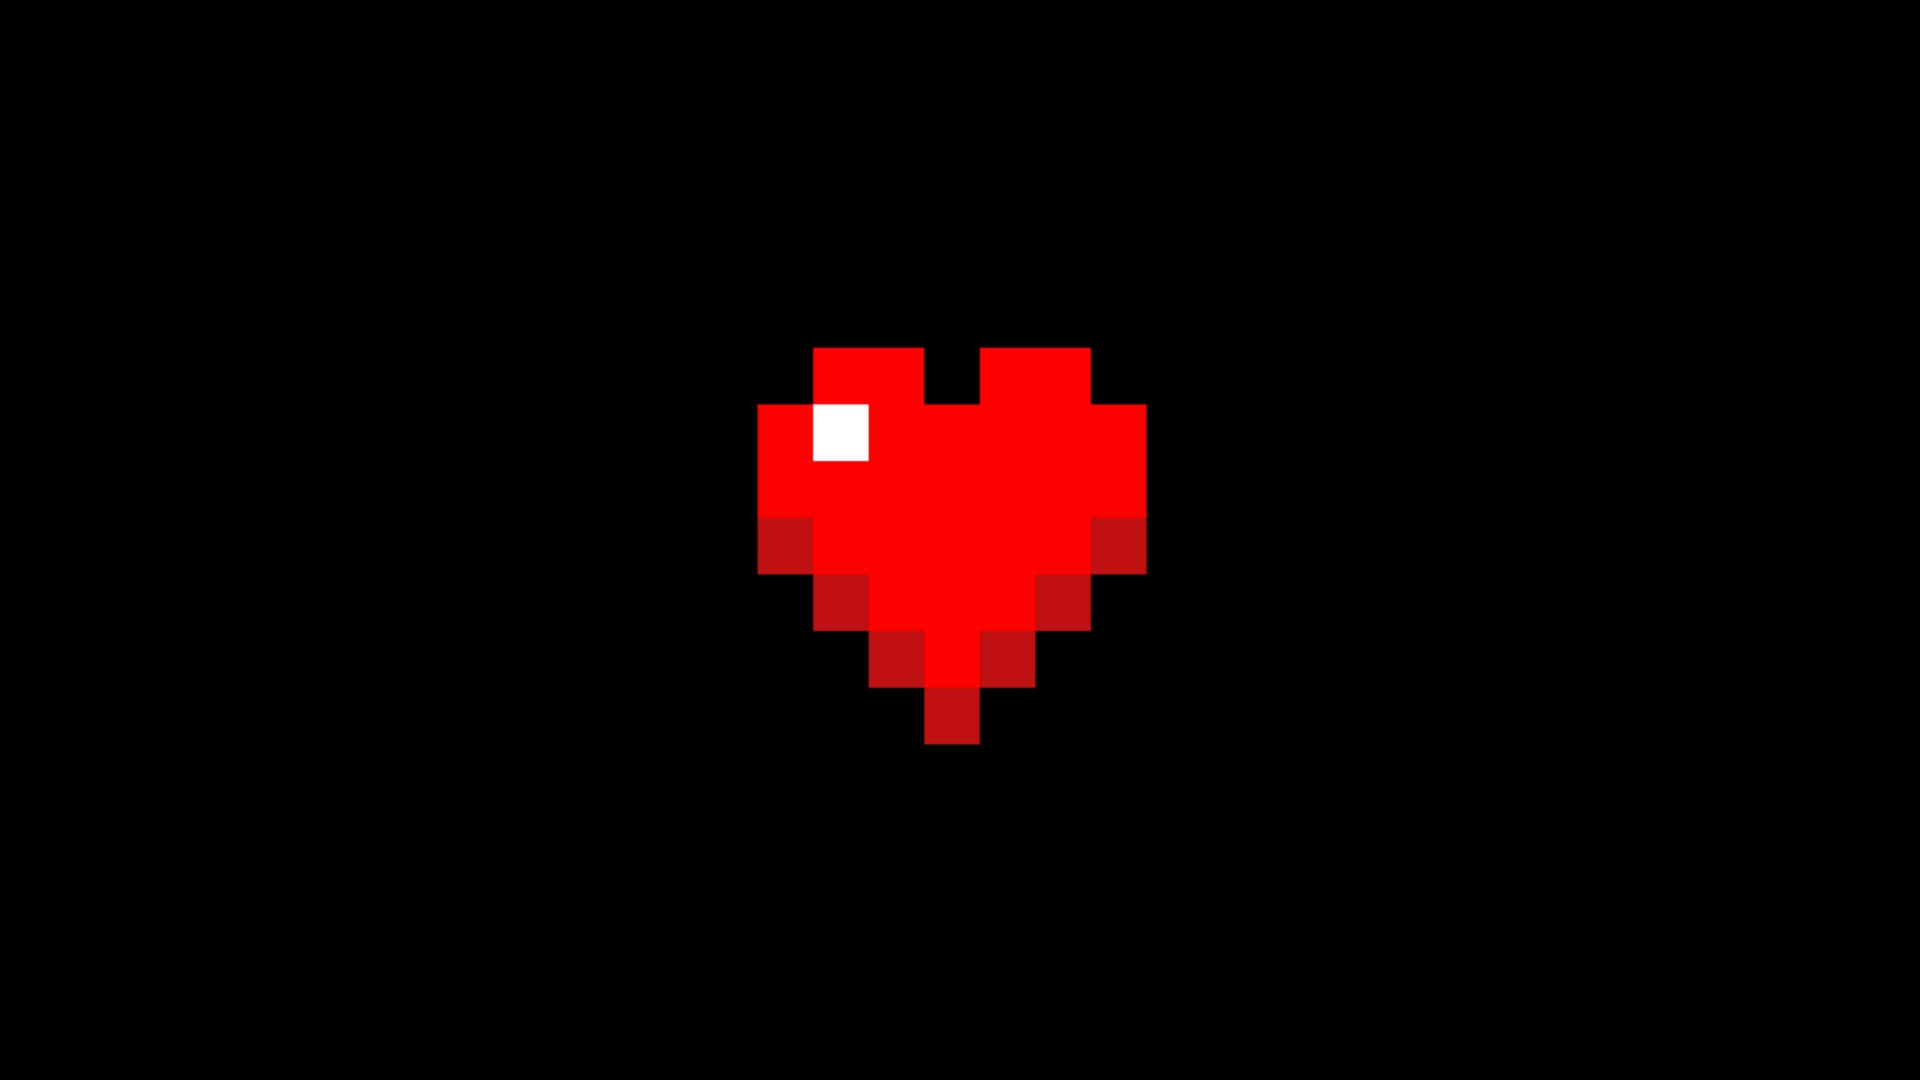 Red Heart In Aesthetic Pixel Art Wallpaper